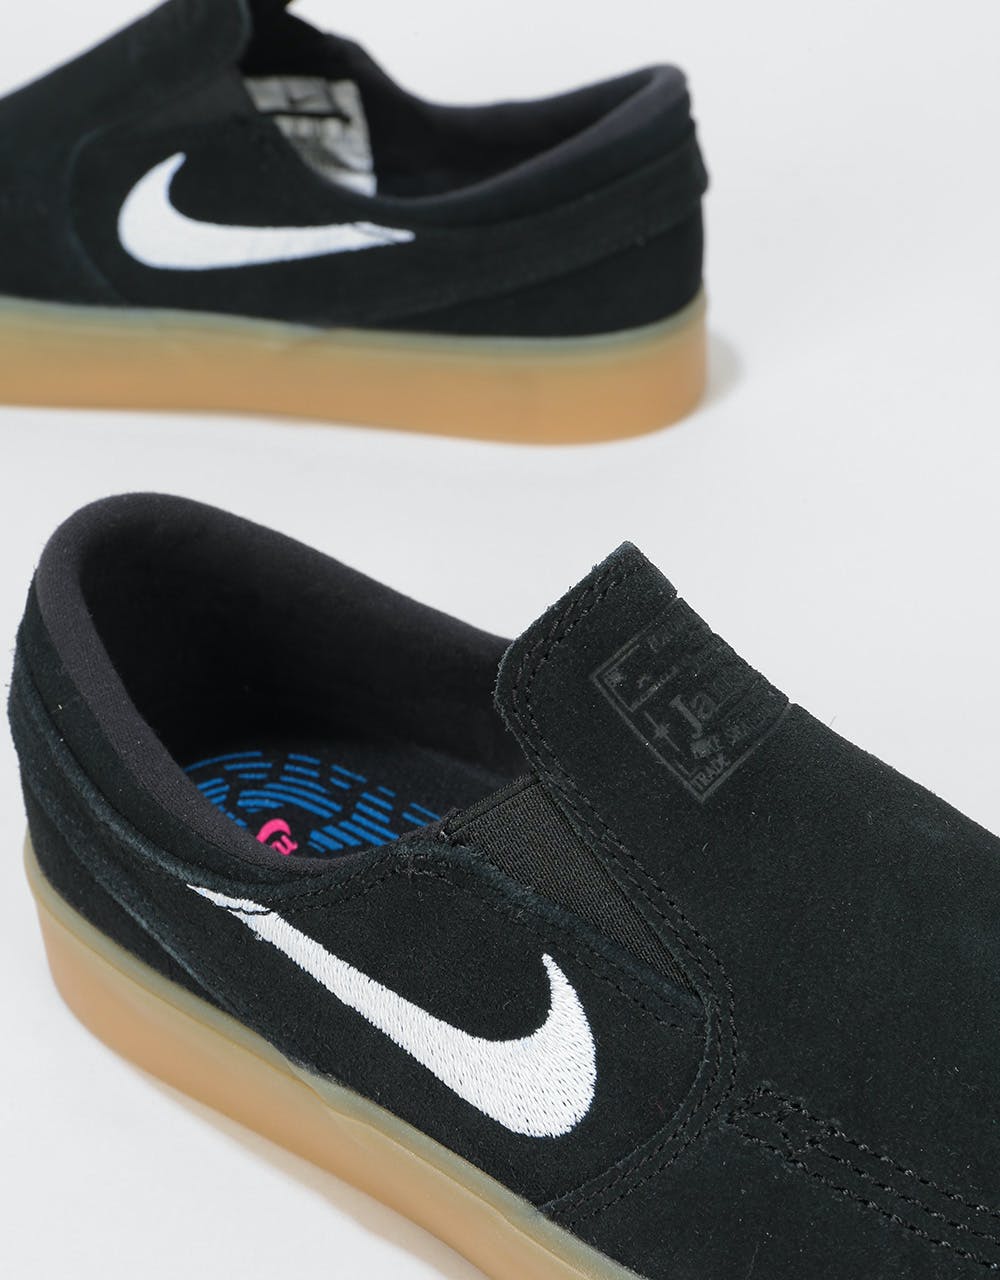 Nike SB Zoom Janoski Slip RM Skate Shoes - Black/White-Gum Light Brown